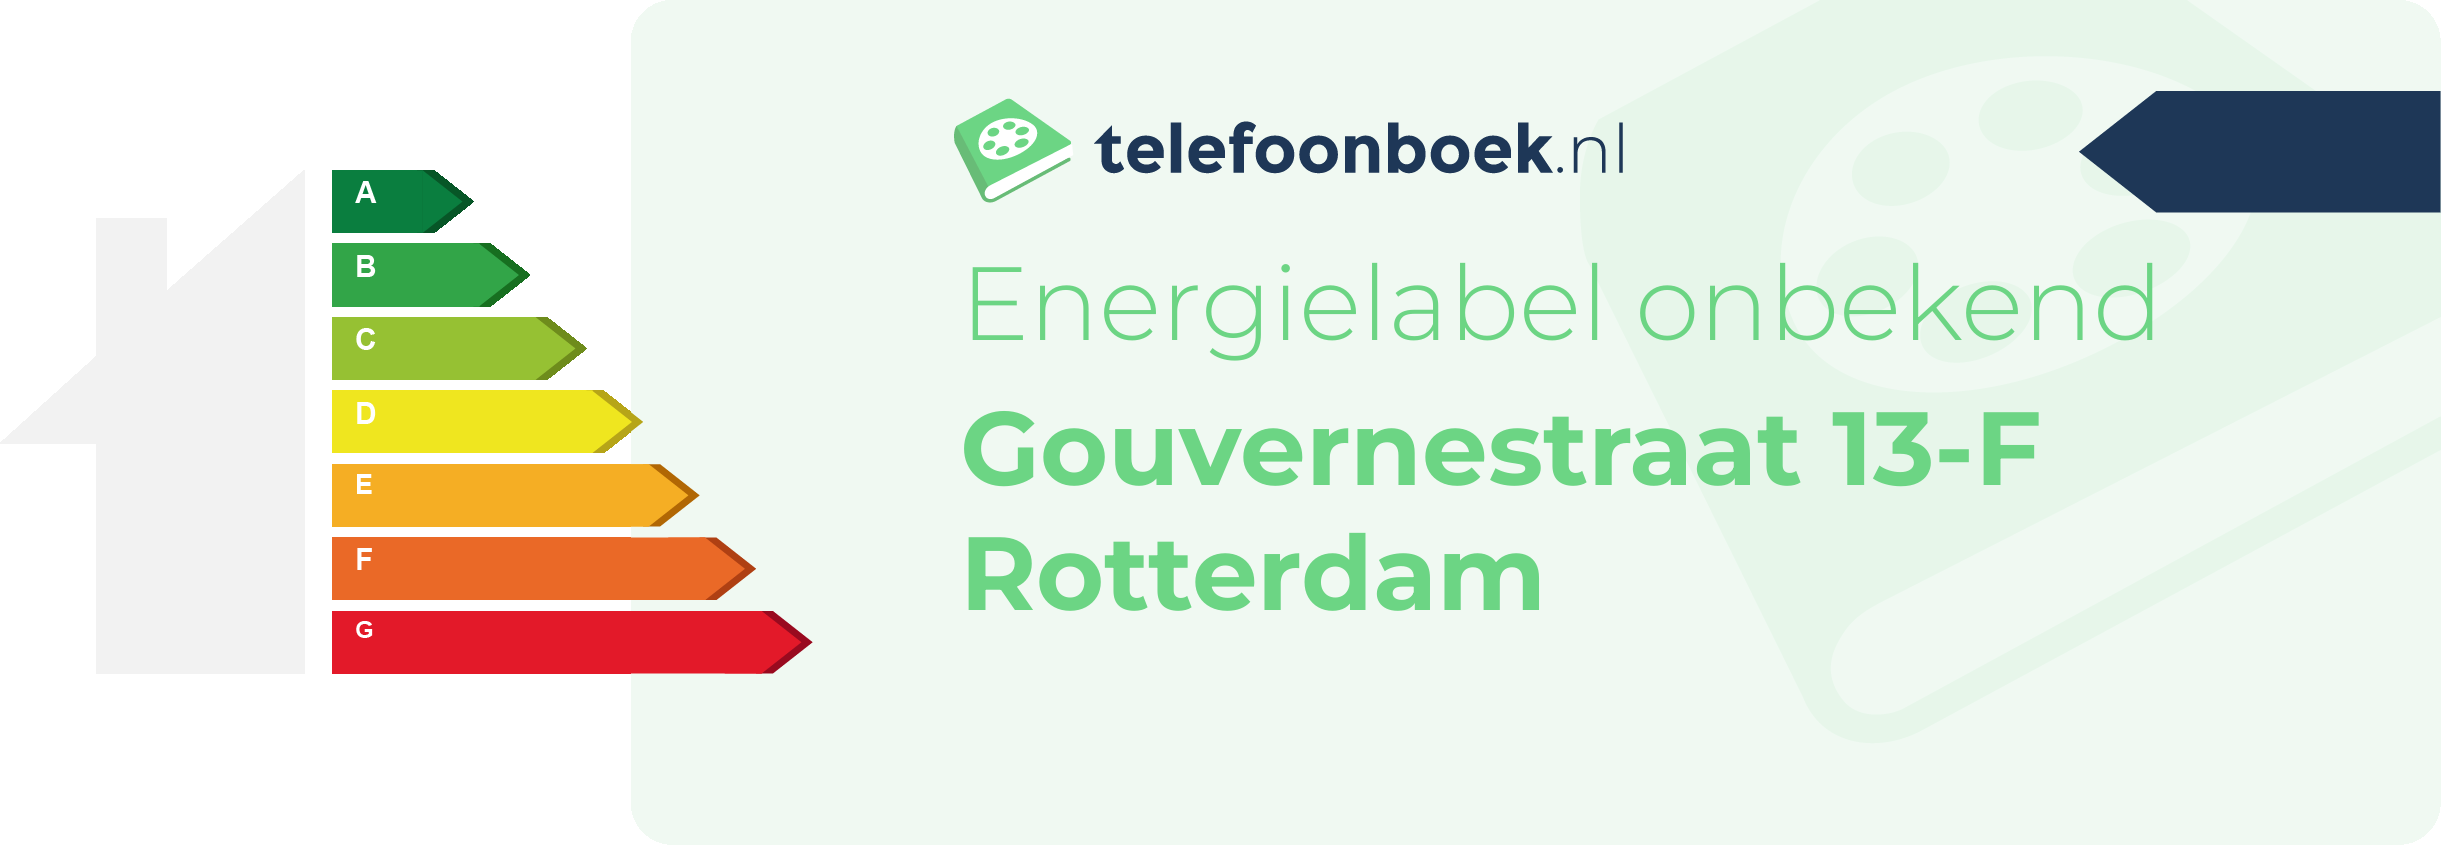 Energielabel Gouvernestraat 13-F Rotterdam